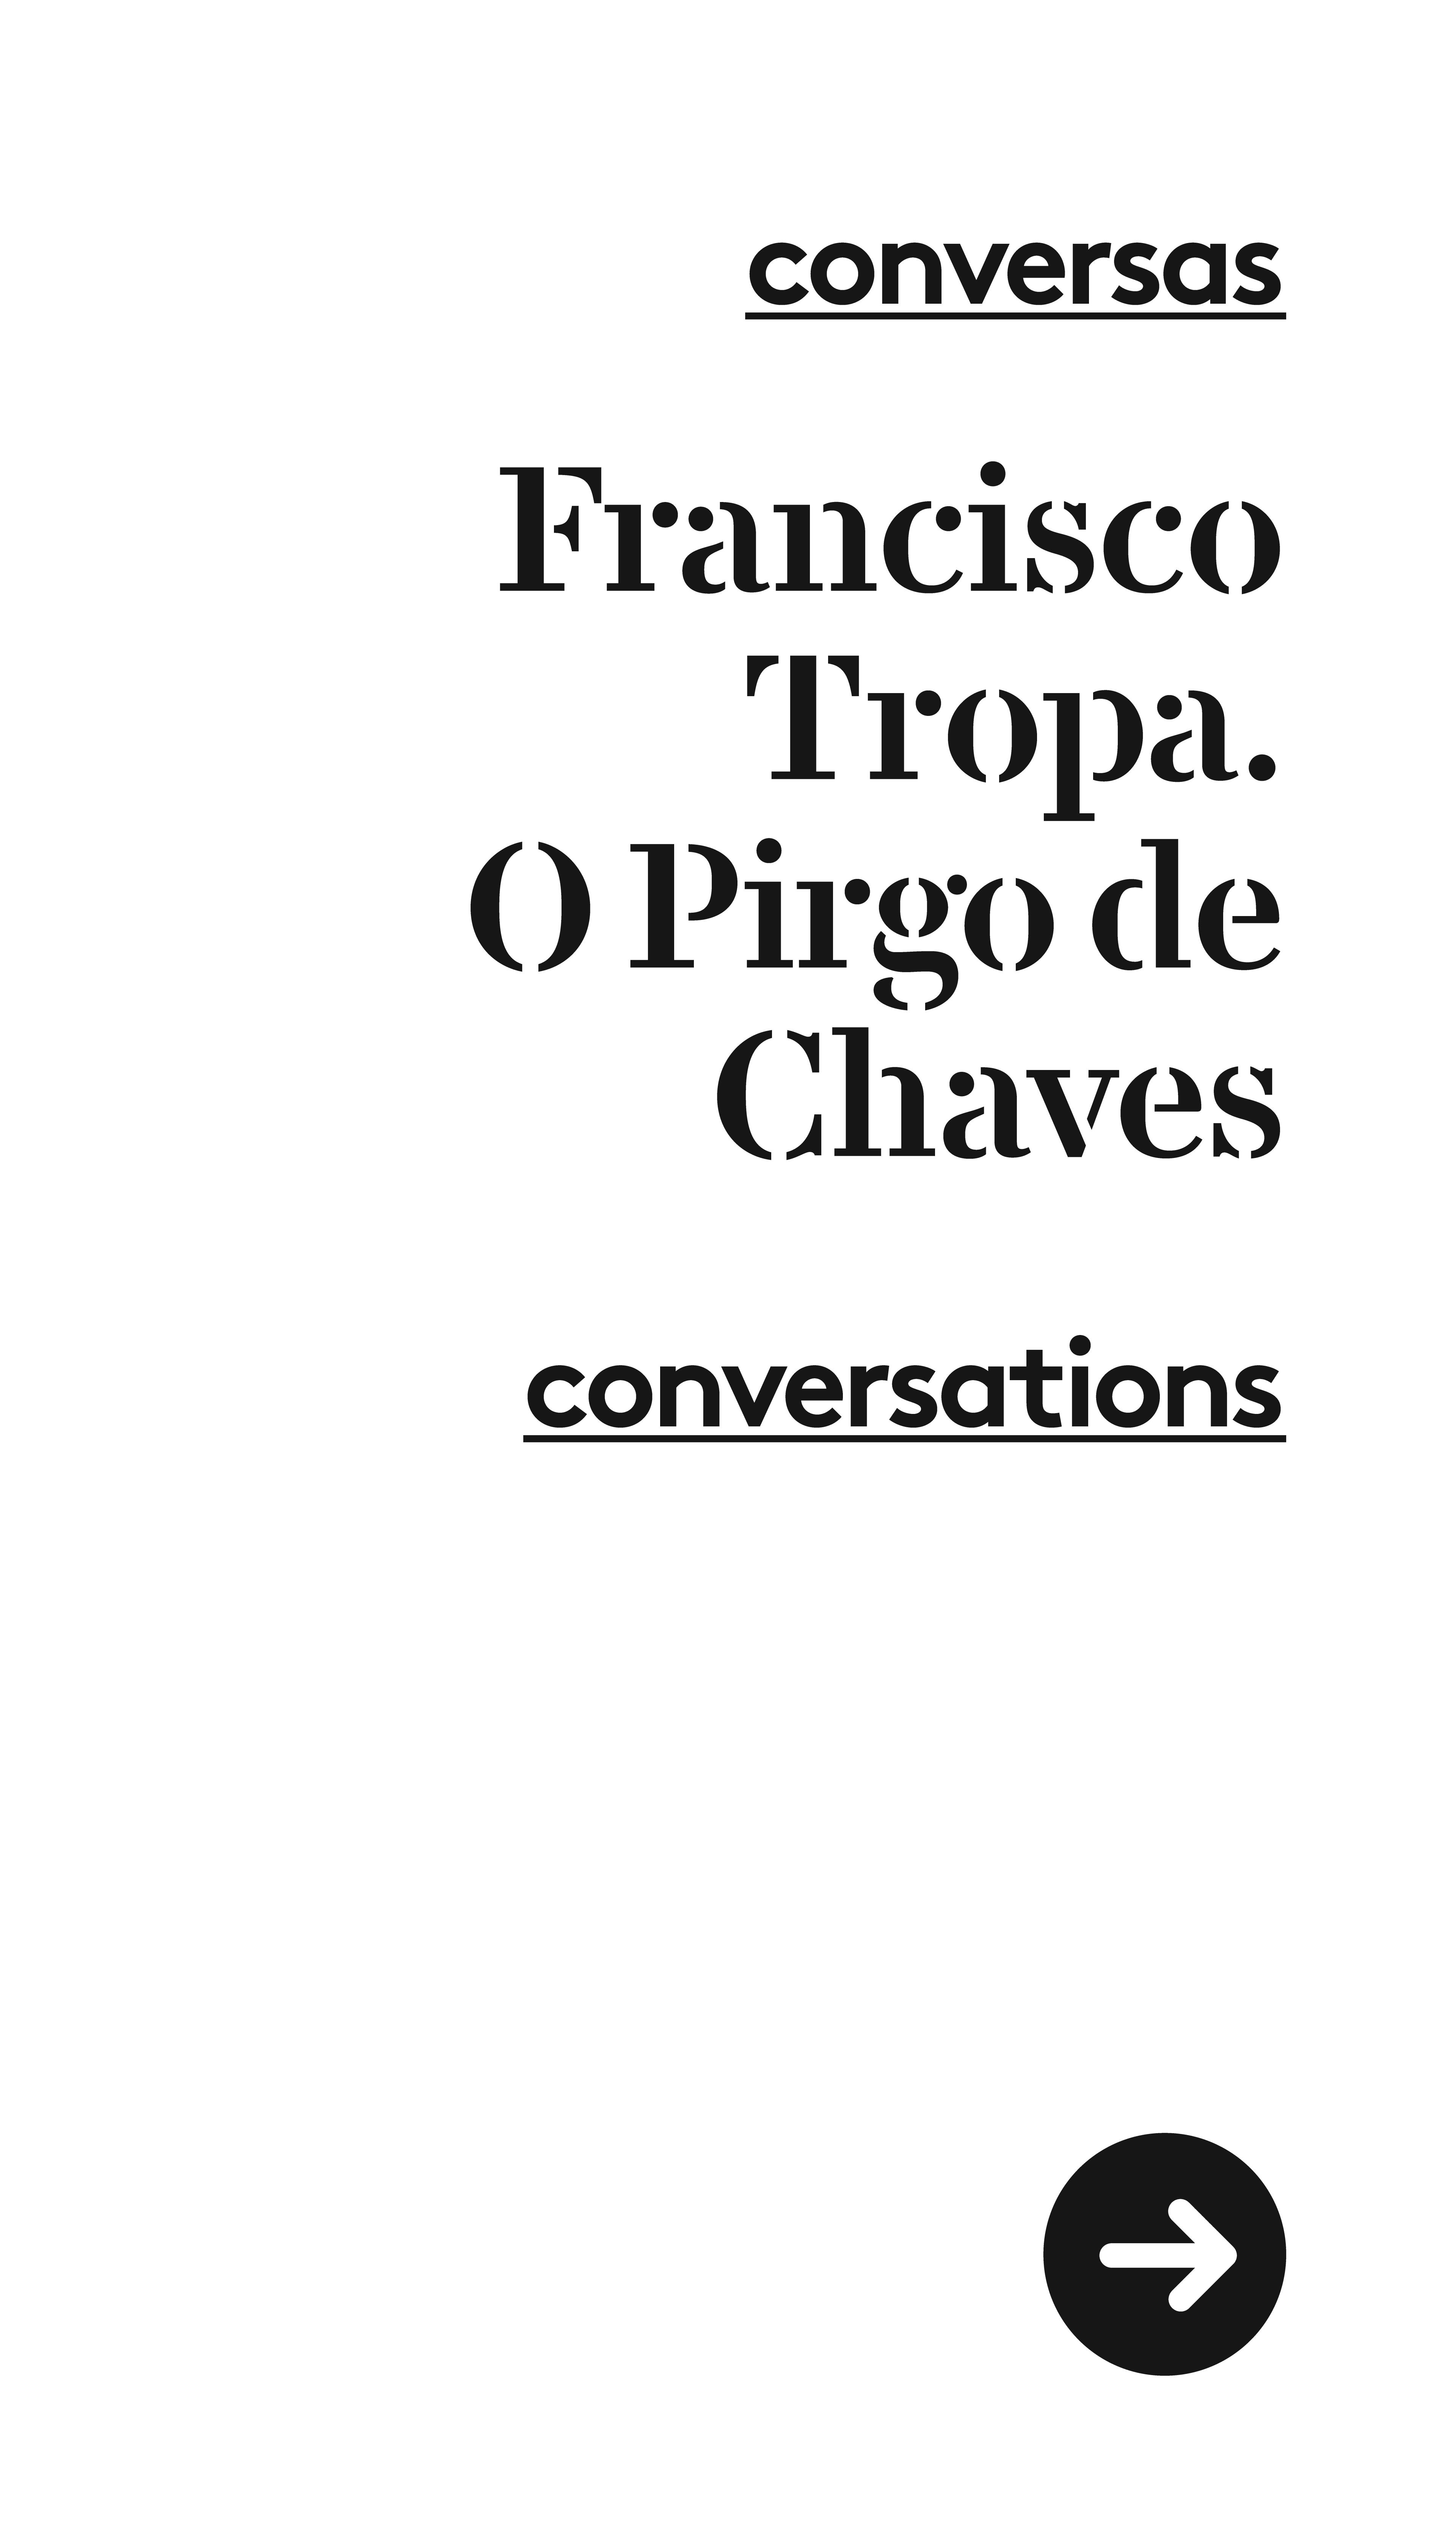 Francisco Tropa. O Pirgo de Chaves